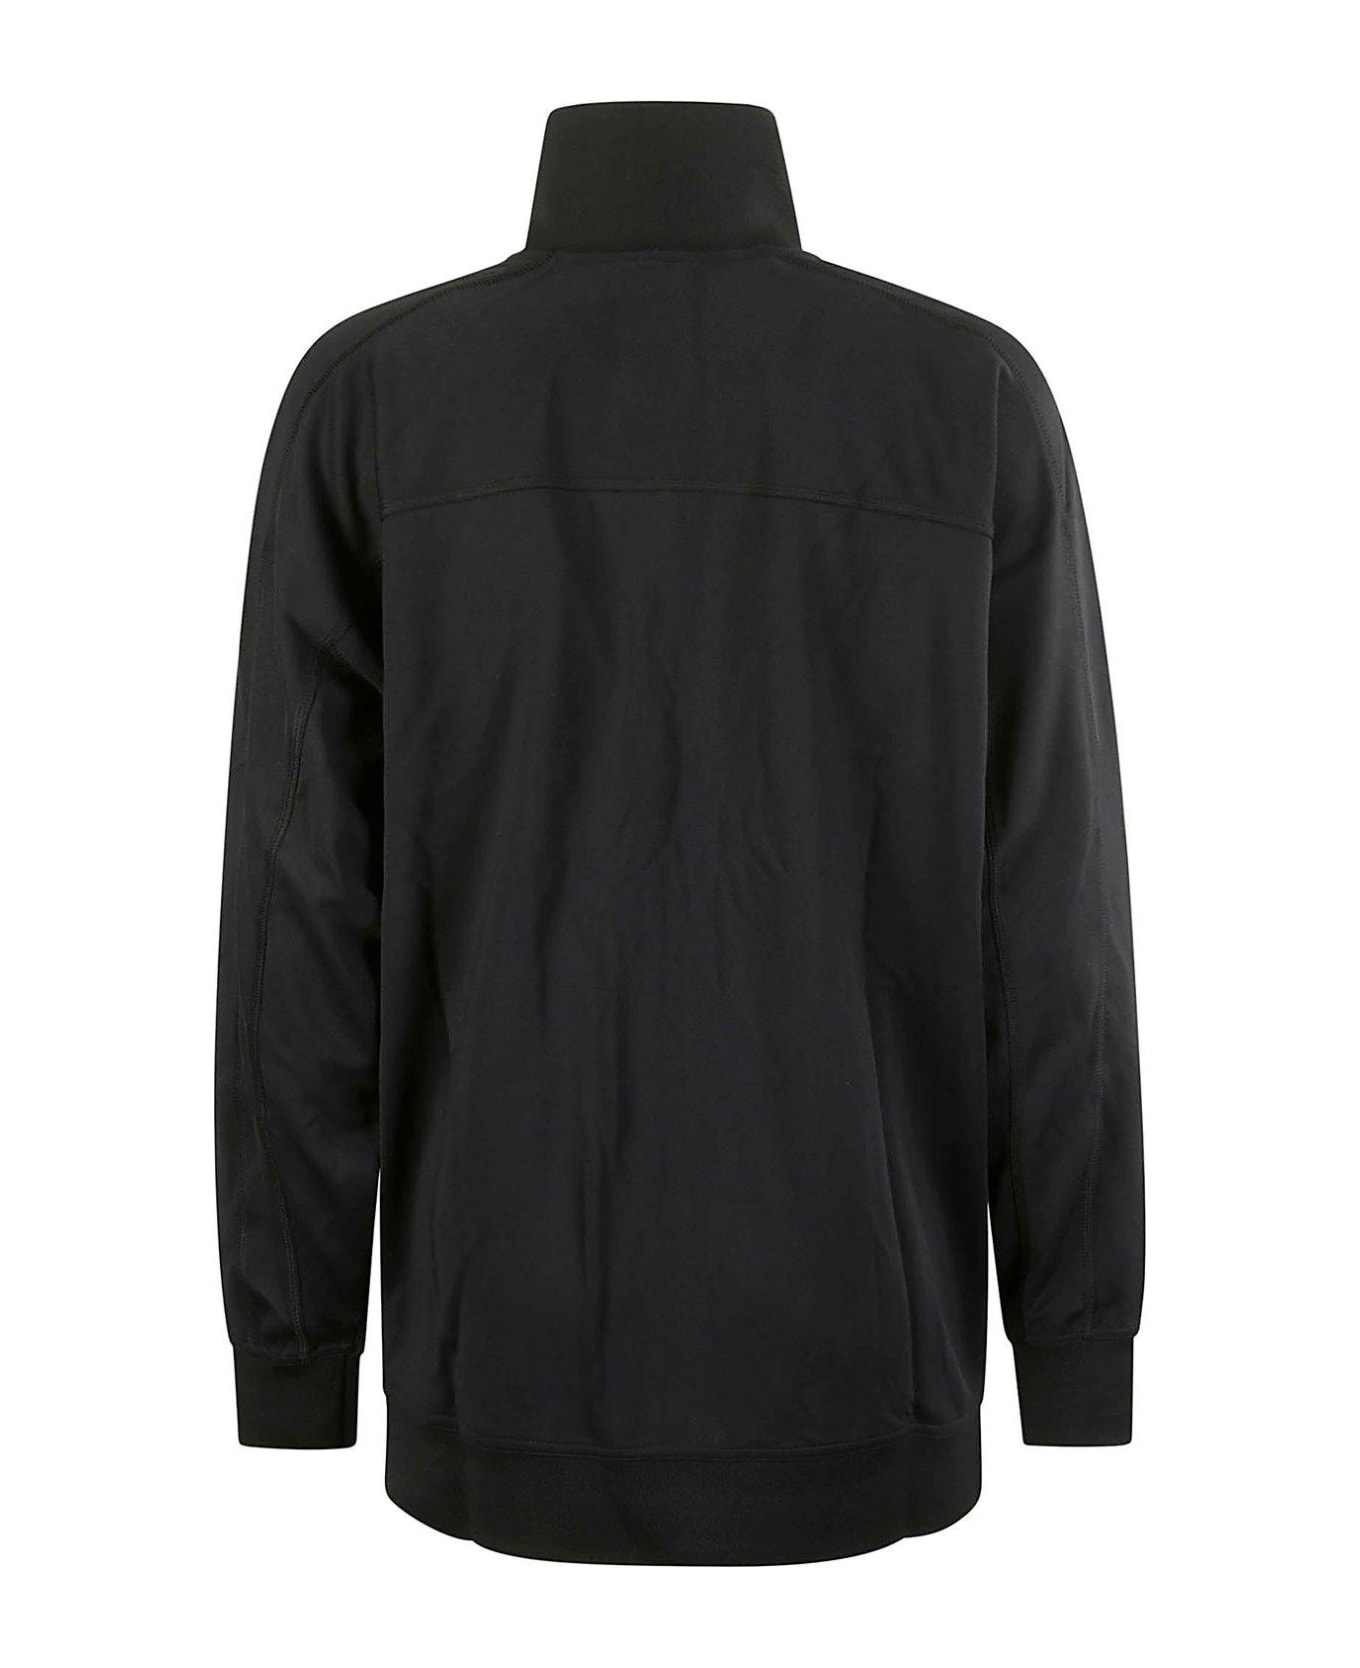 Adidas by Stella McCartney Truecasuals Zip-up Track Jacket - BLACKWHITE